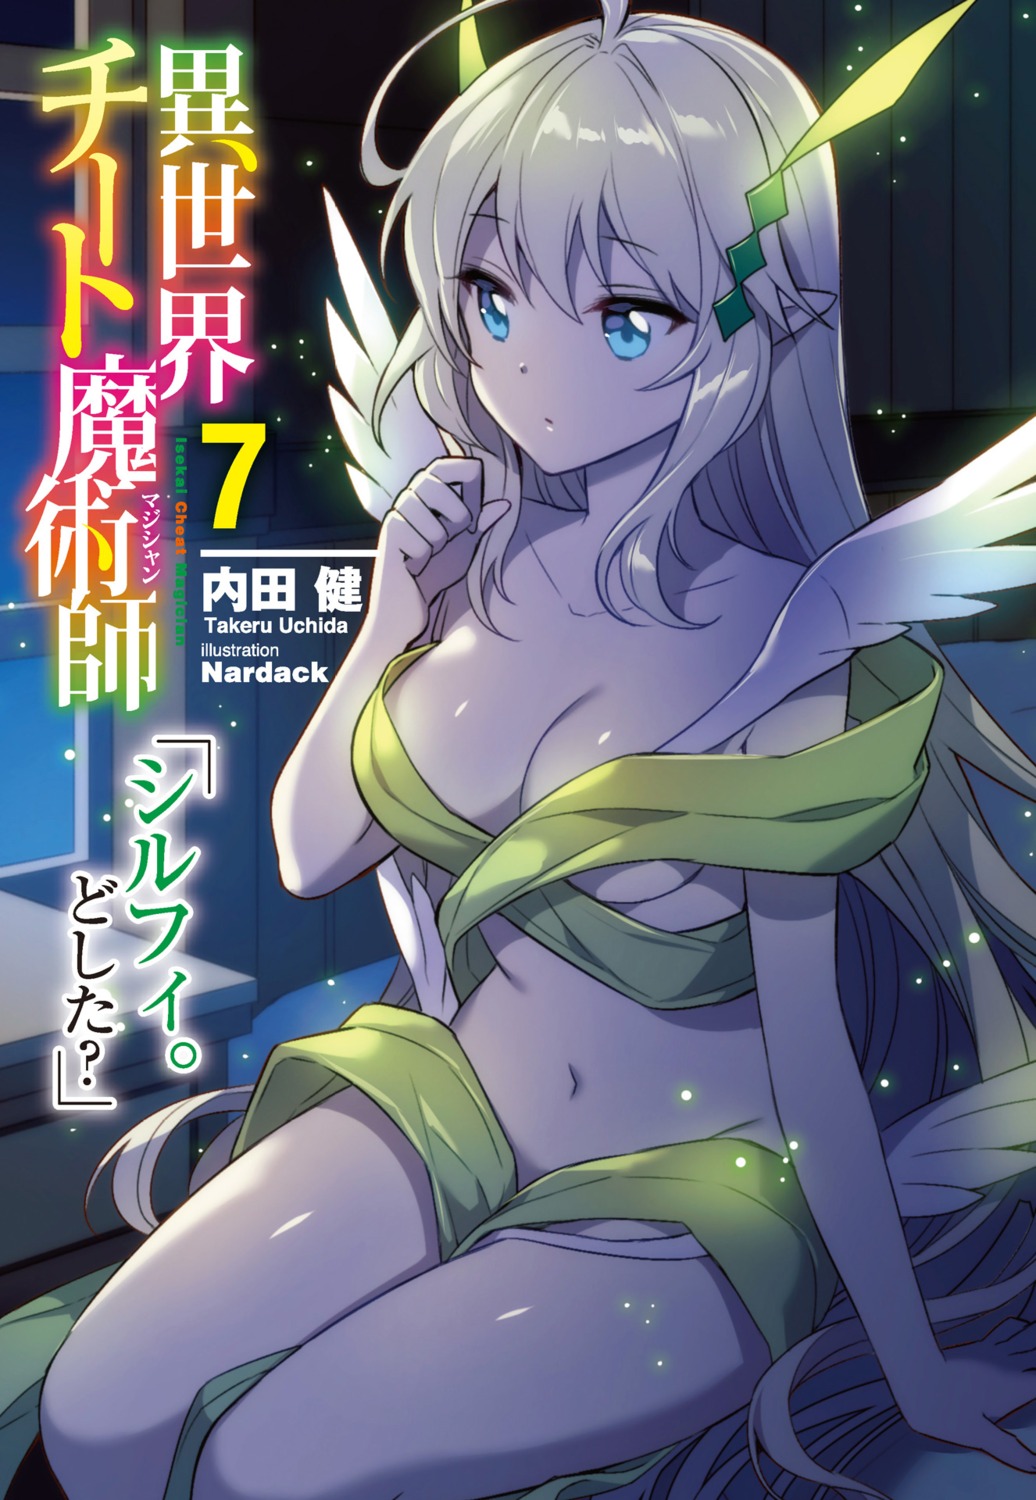 Sleepy Comics on X: ISEKAI CHEAT MAGICIAN (Ligh Novel) vol 3 #bondage  #unconscious #manga  / X